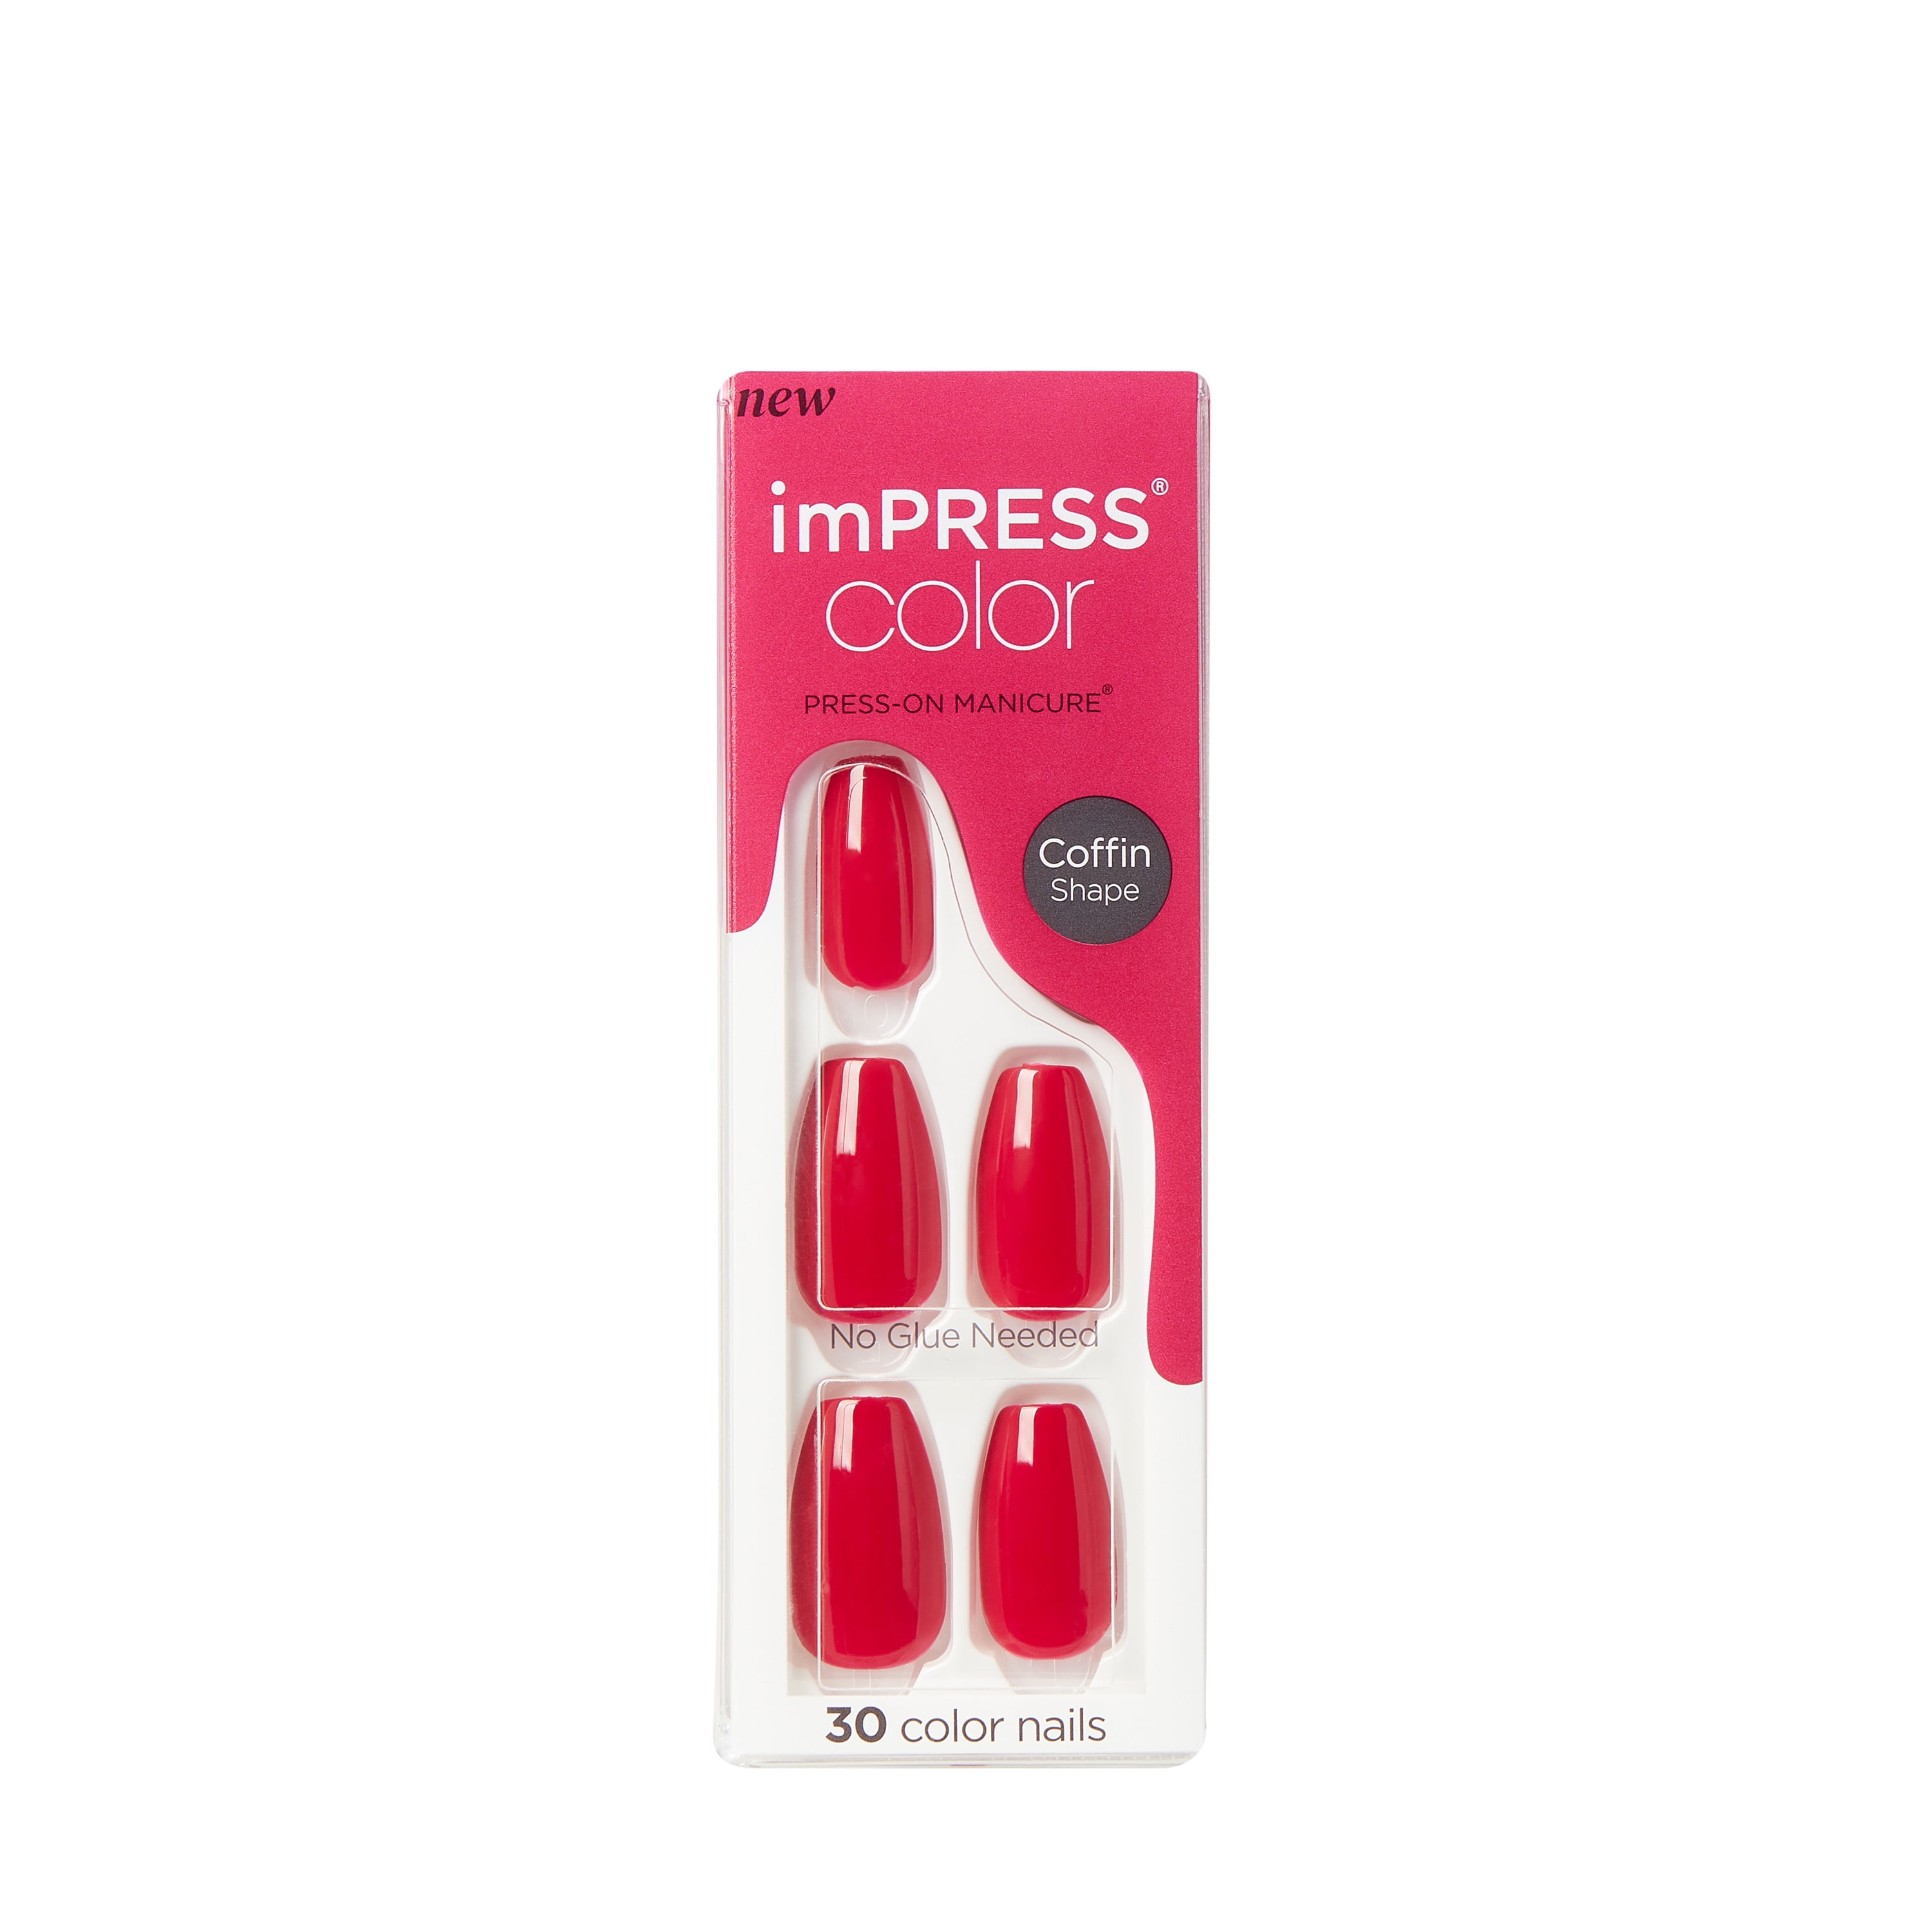 KISS imPRESS Color Press-On Nails, 'Very Berry', 30 Count - Walmart.com